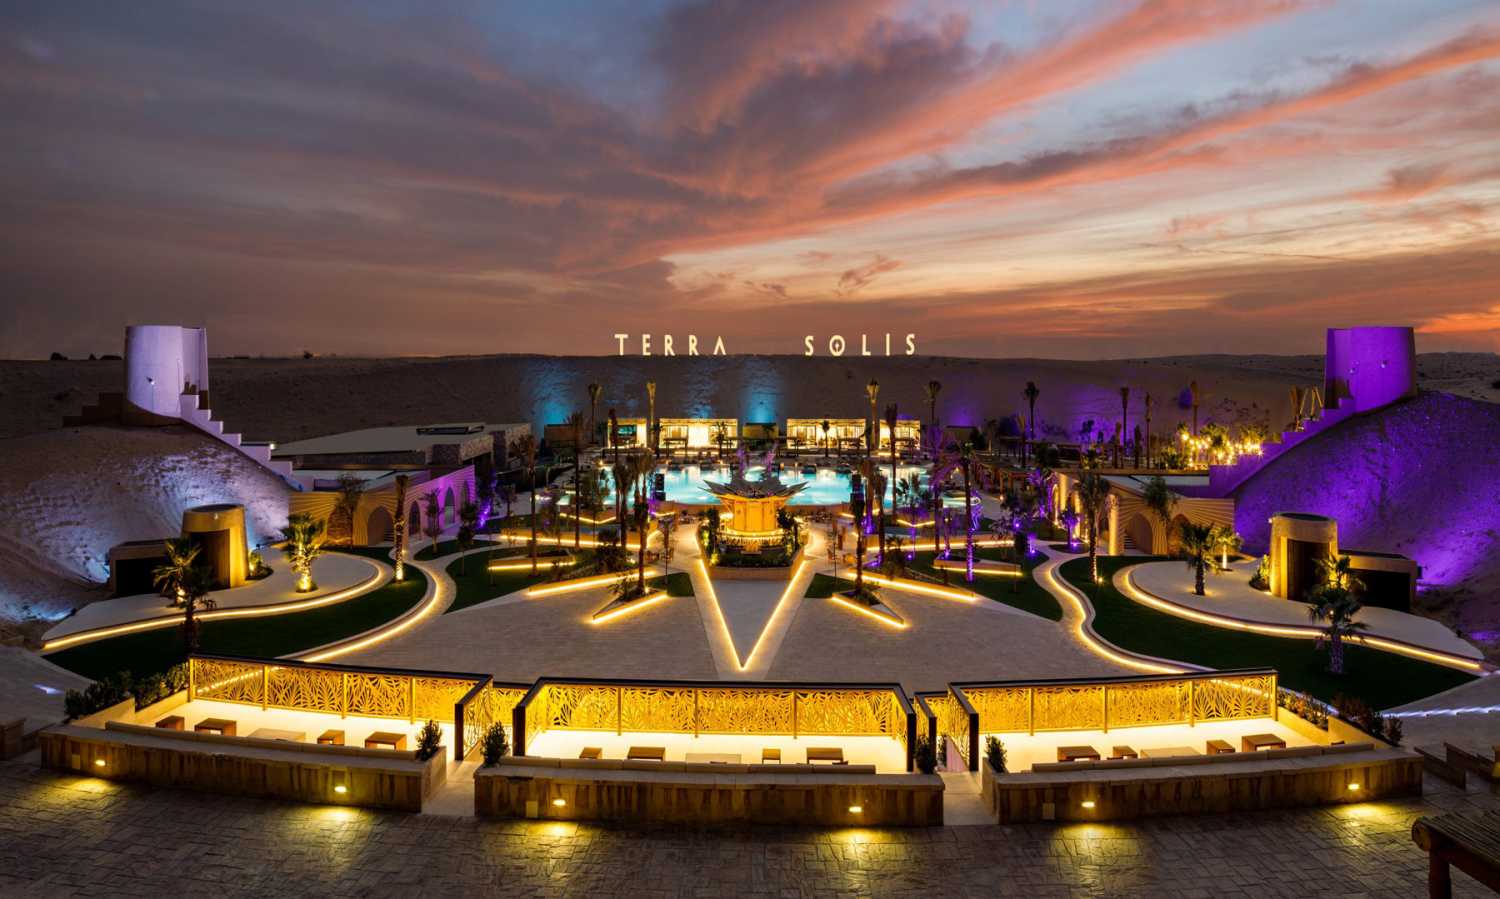 Terra Solis is a new multi-purpose venue located just 40 minutes outside Dubai